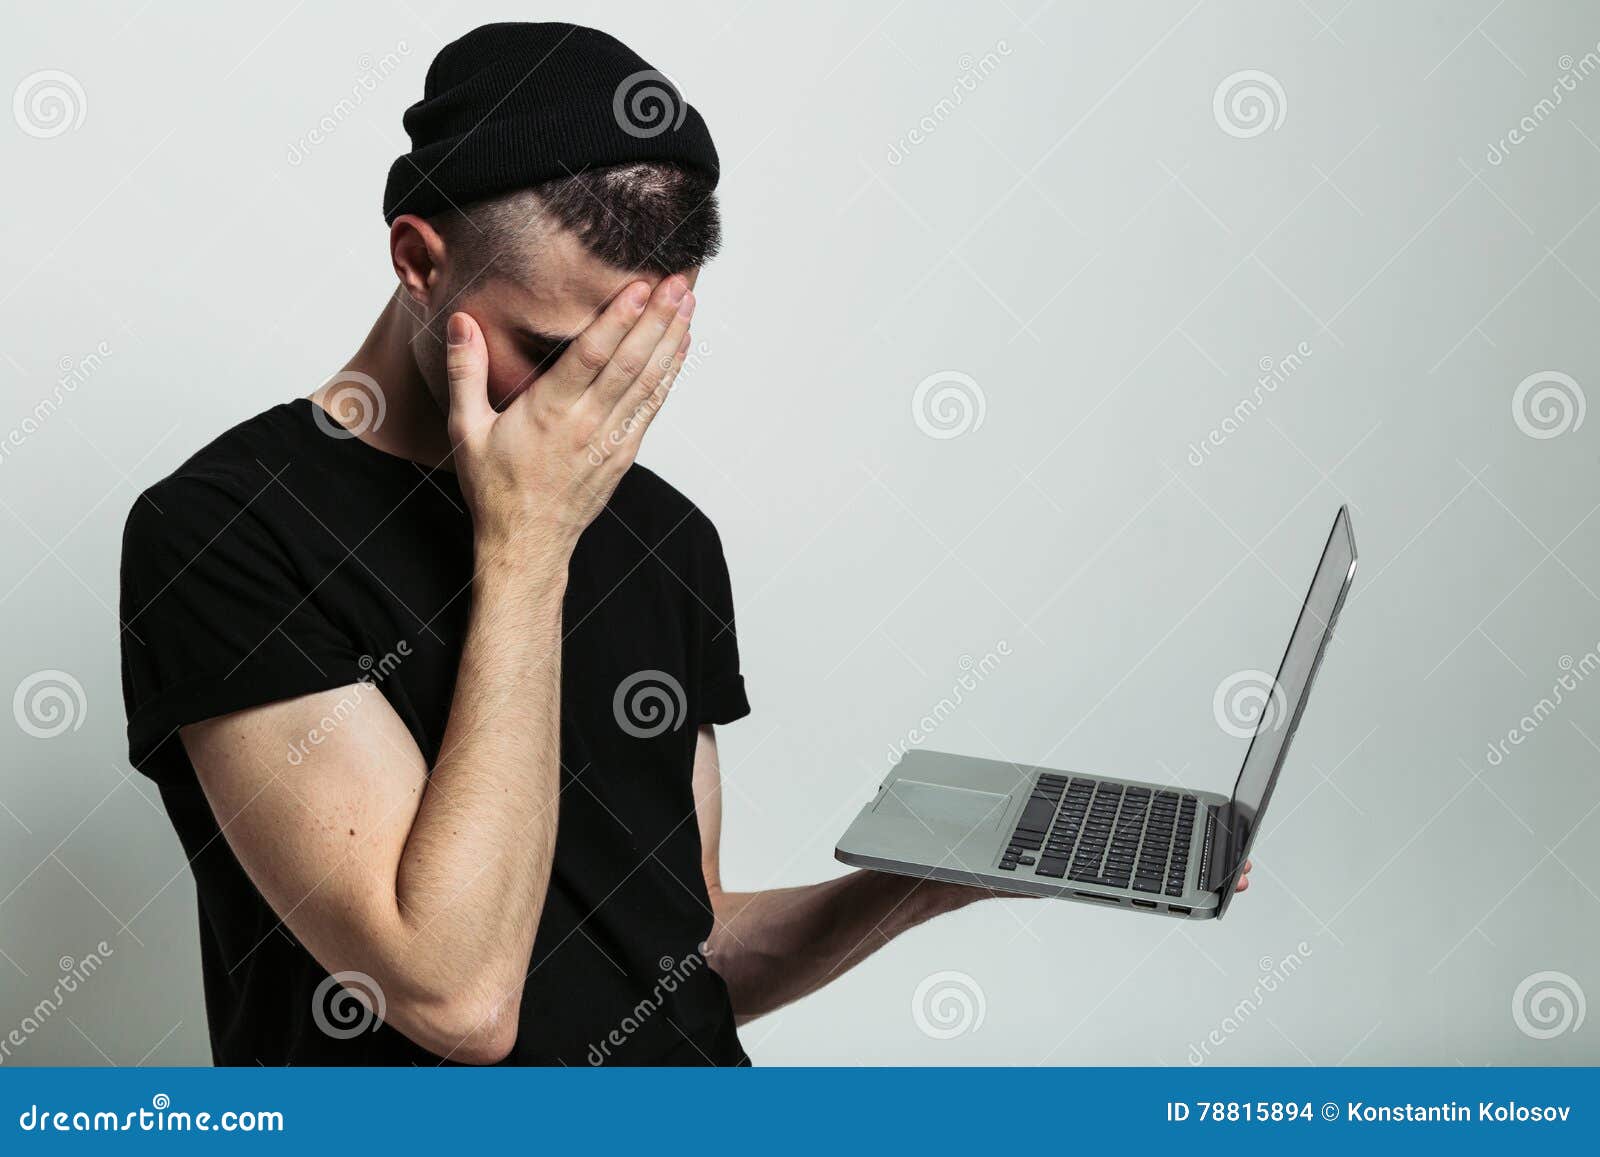 close-up-view-man-laptop-facepalm-studio-shot-young-guy-black-hat-t-shirt-holding-showing-gesture-copyspace-78815894.jpg